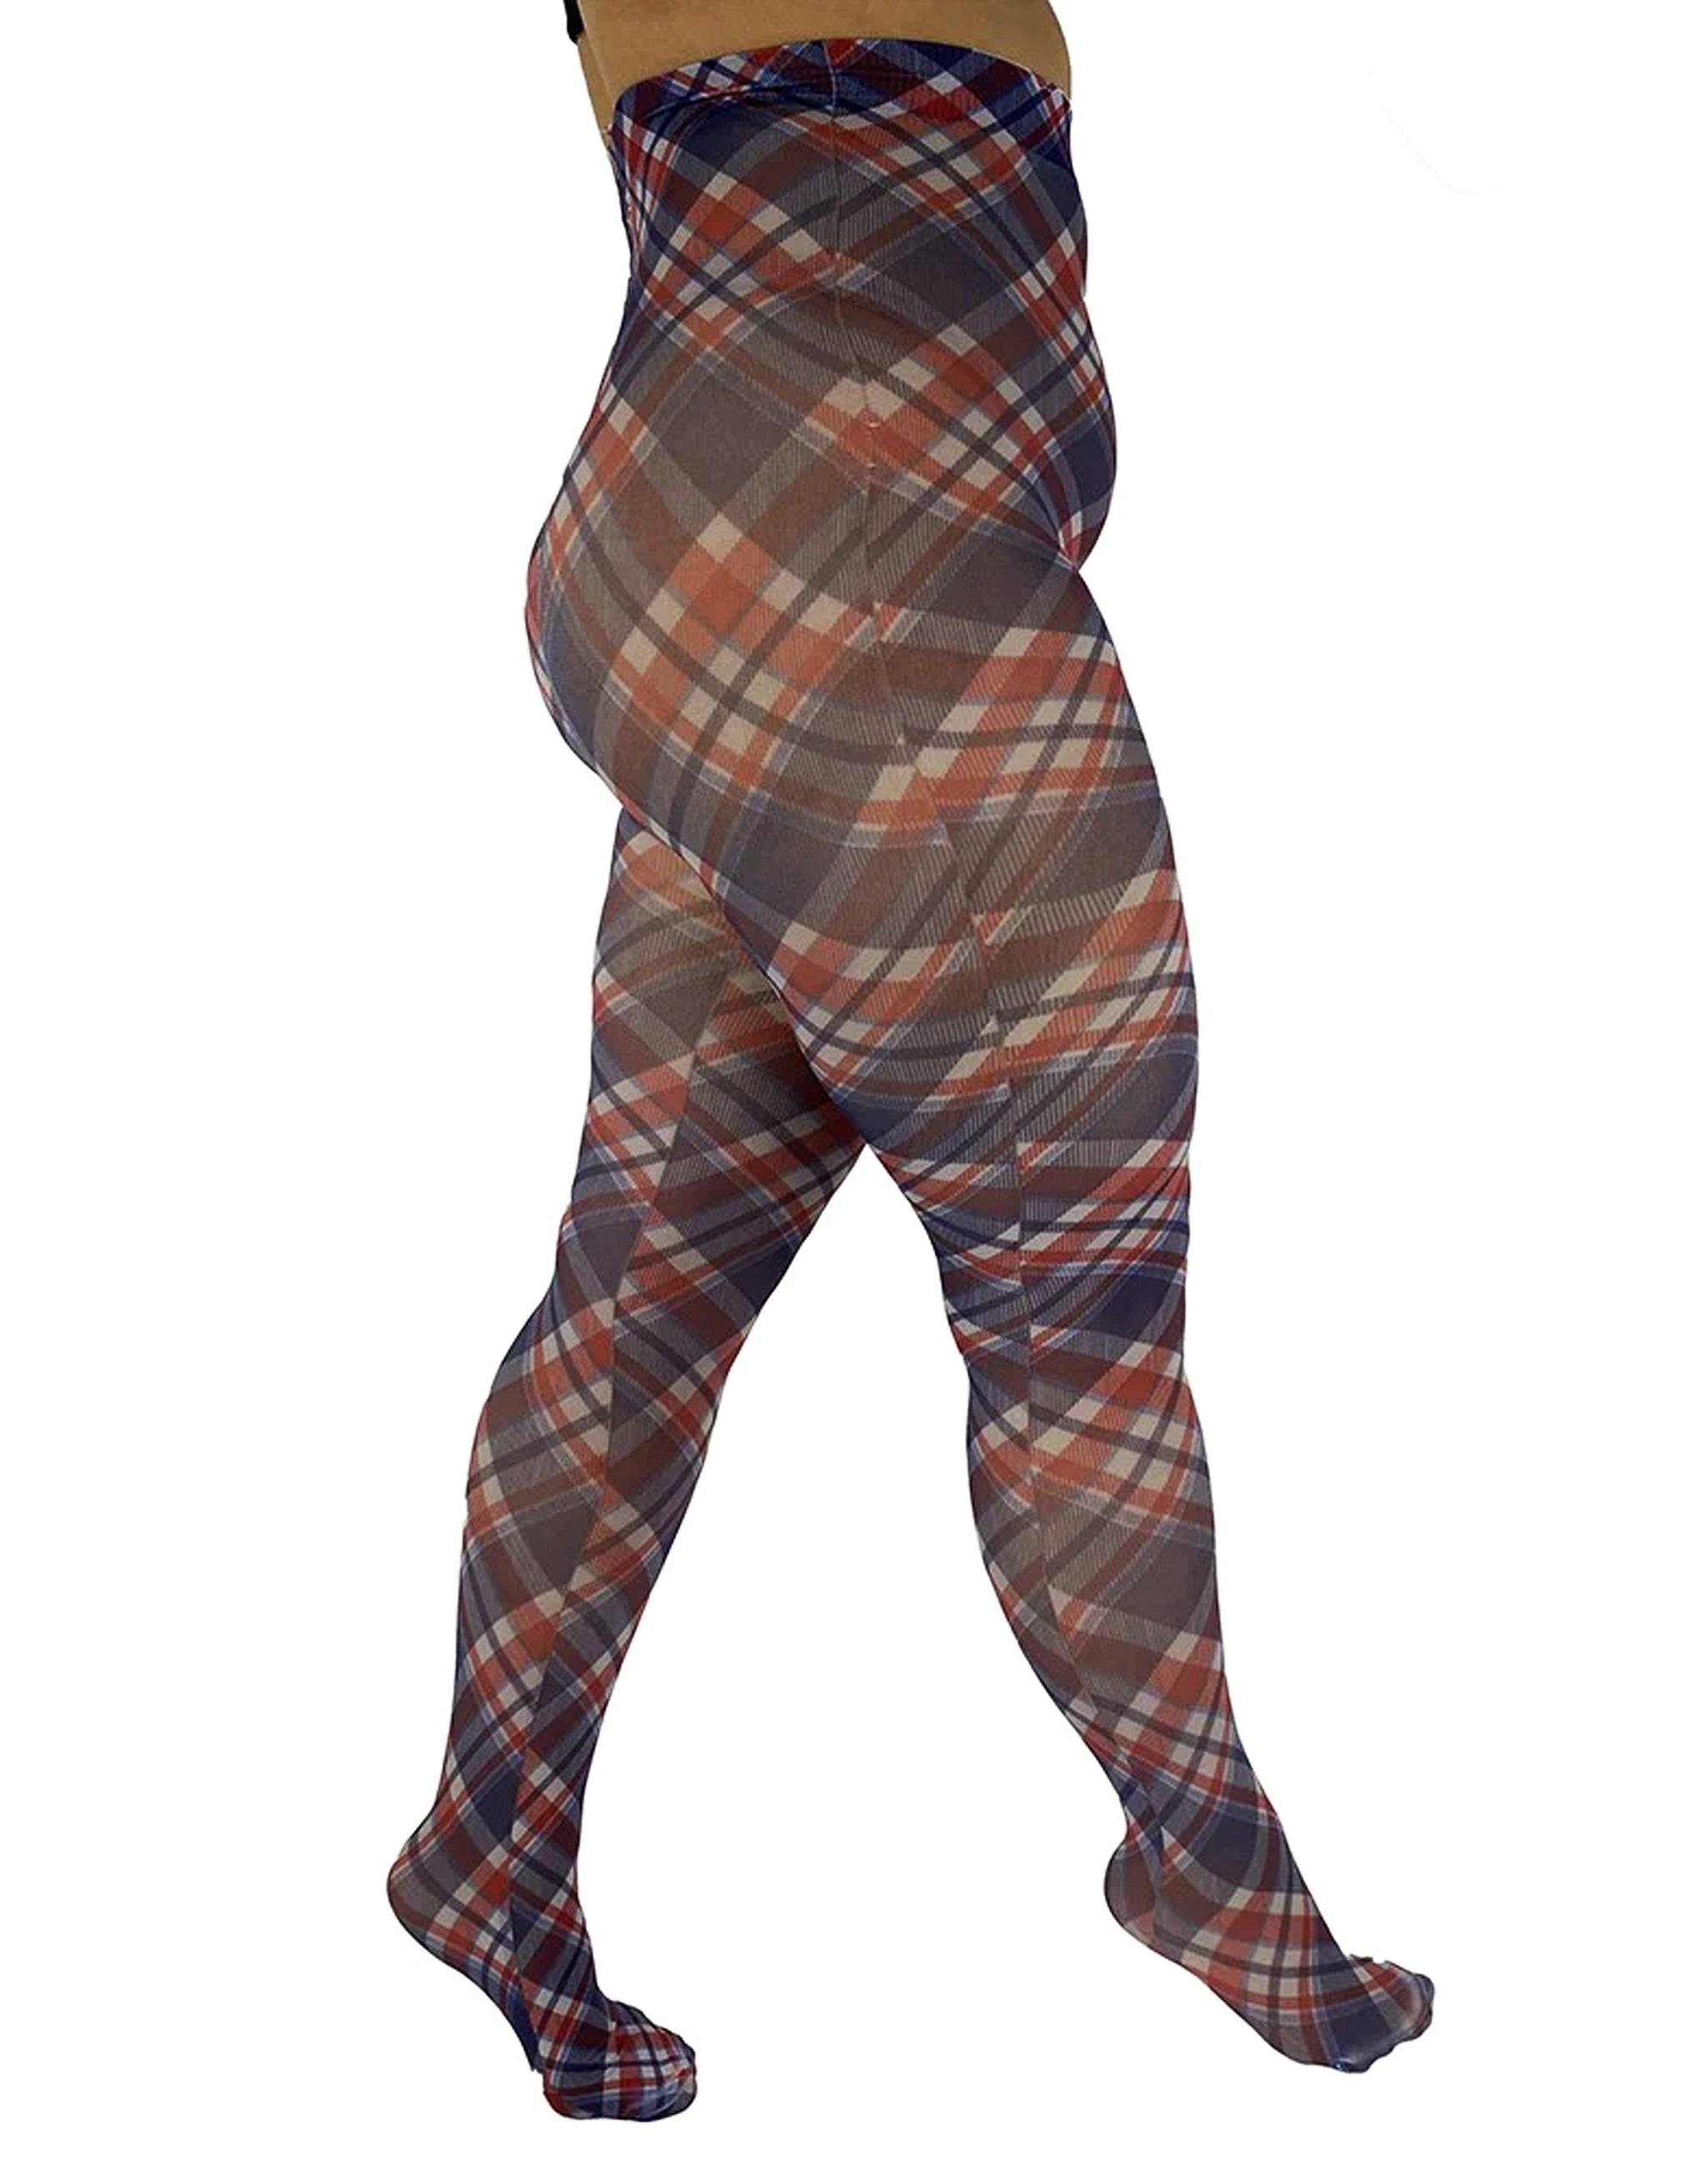 Diamond high waist leggings in plaid tartan pattern